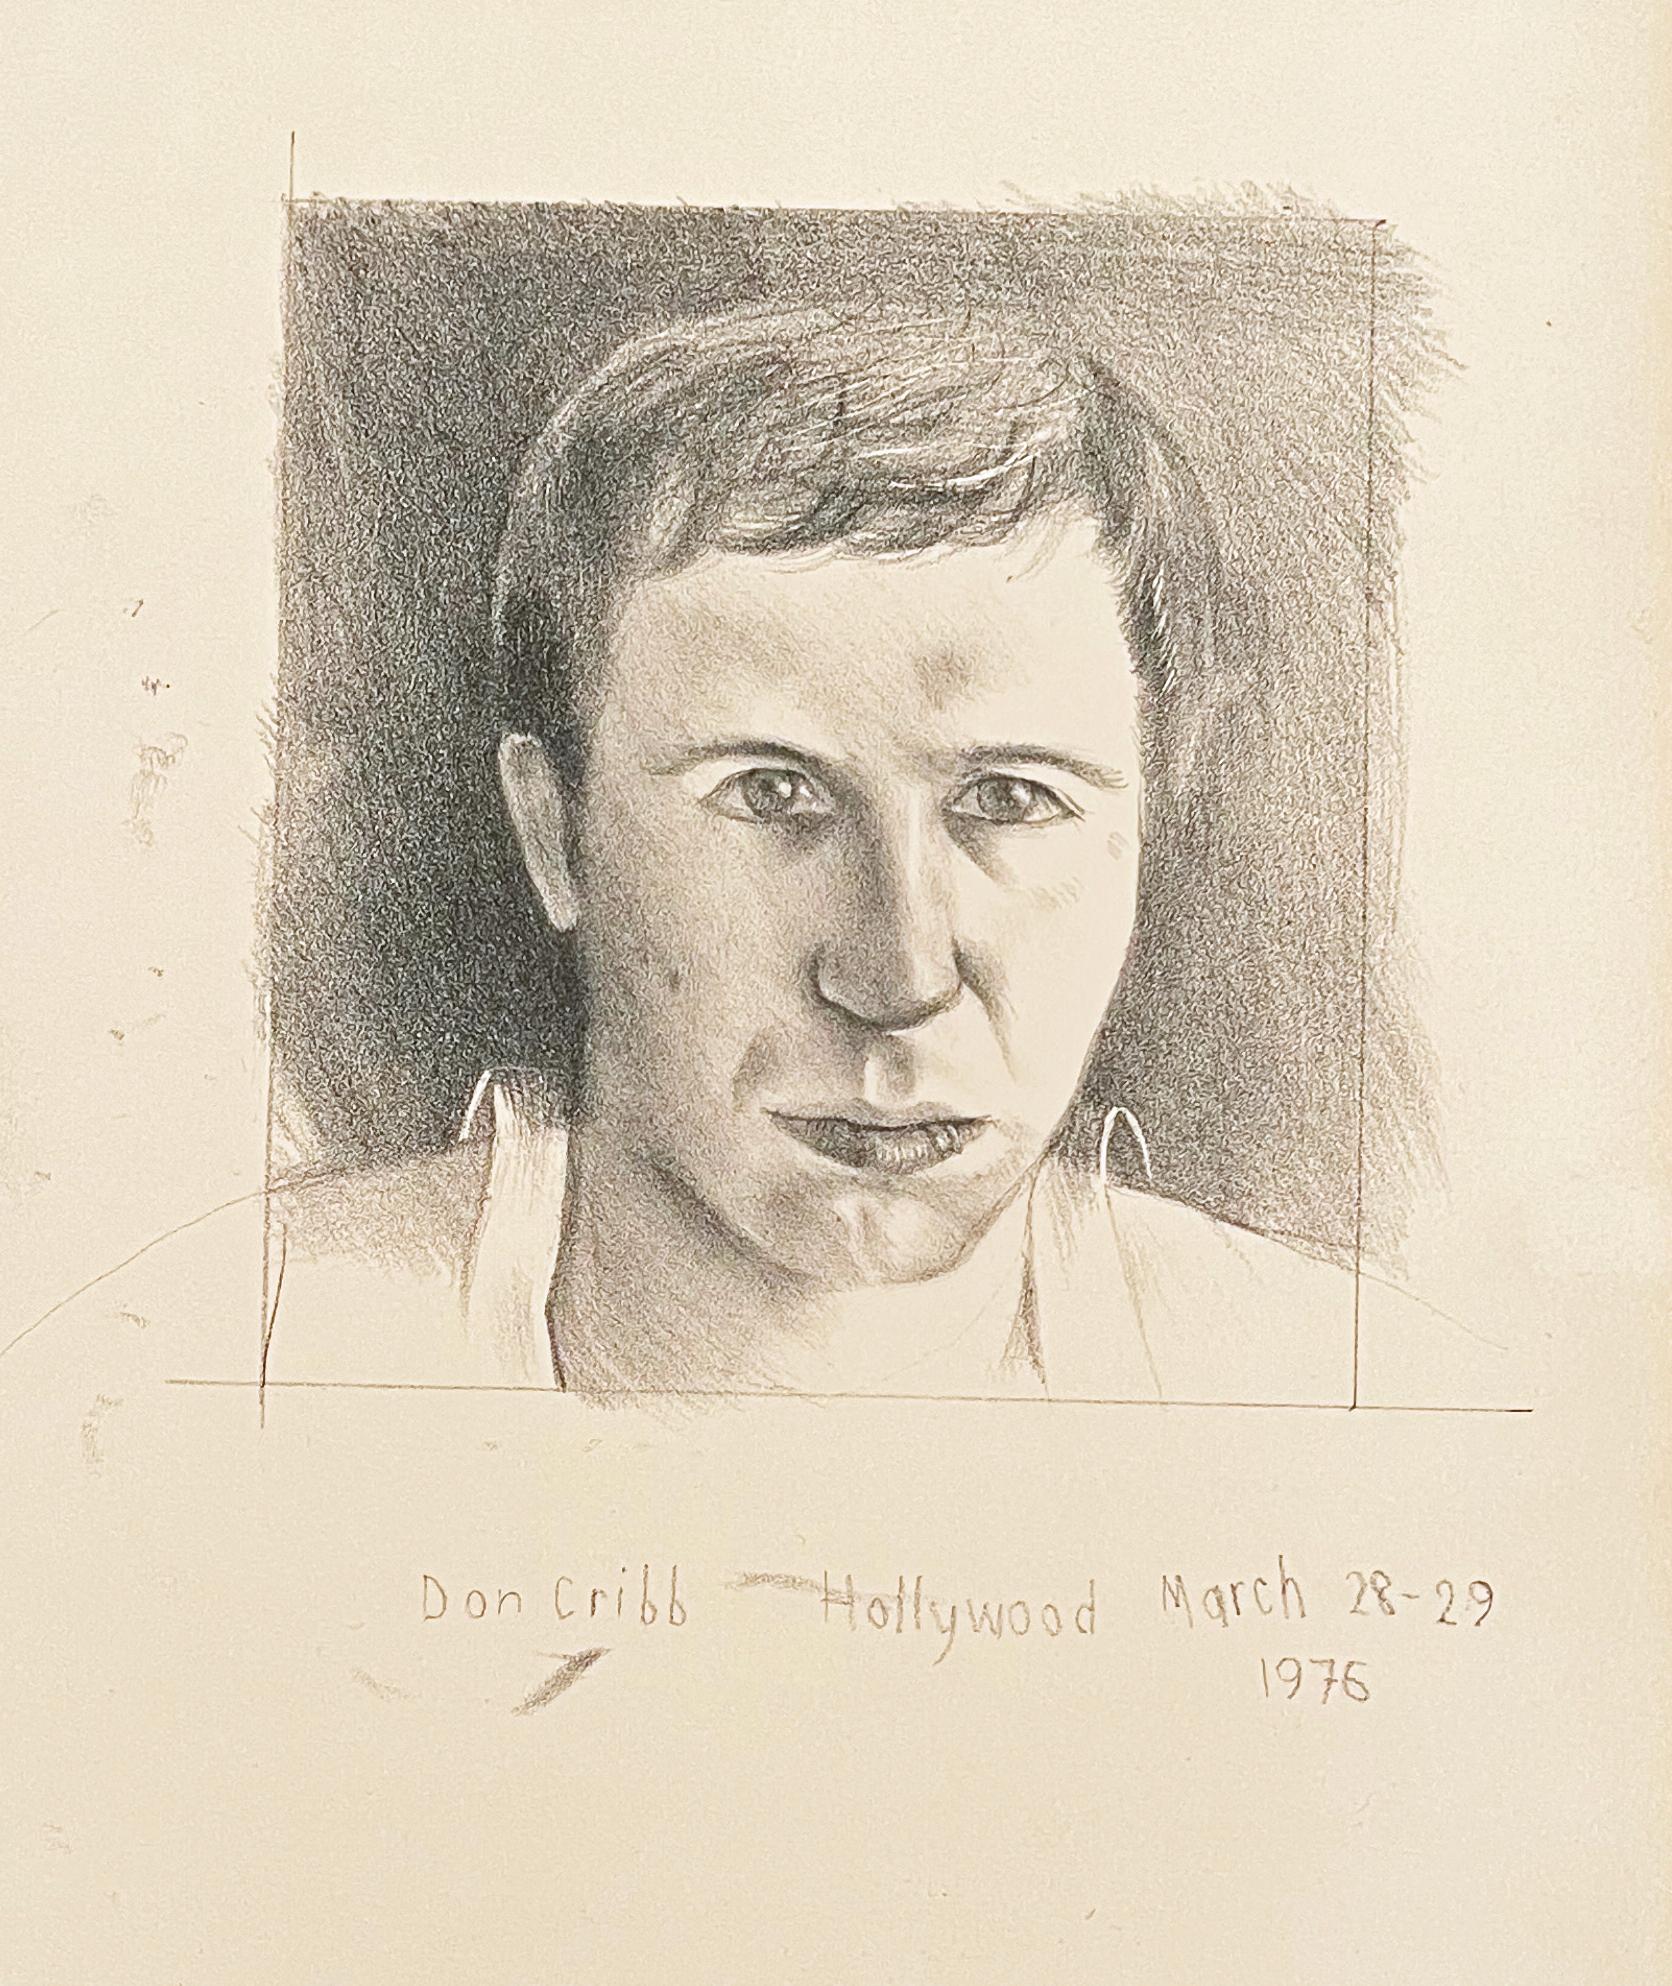 David Hockney Portrait Print - DONALD CRIBB